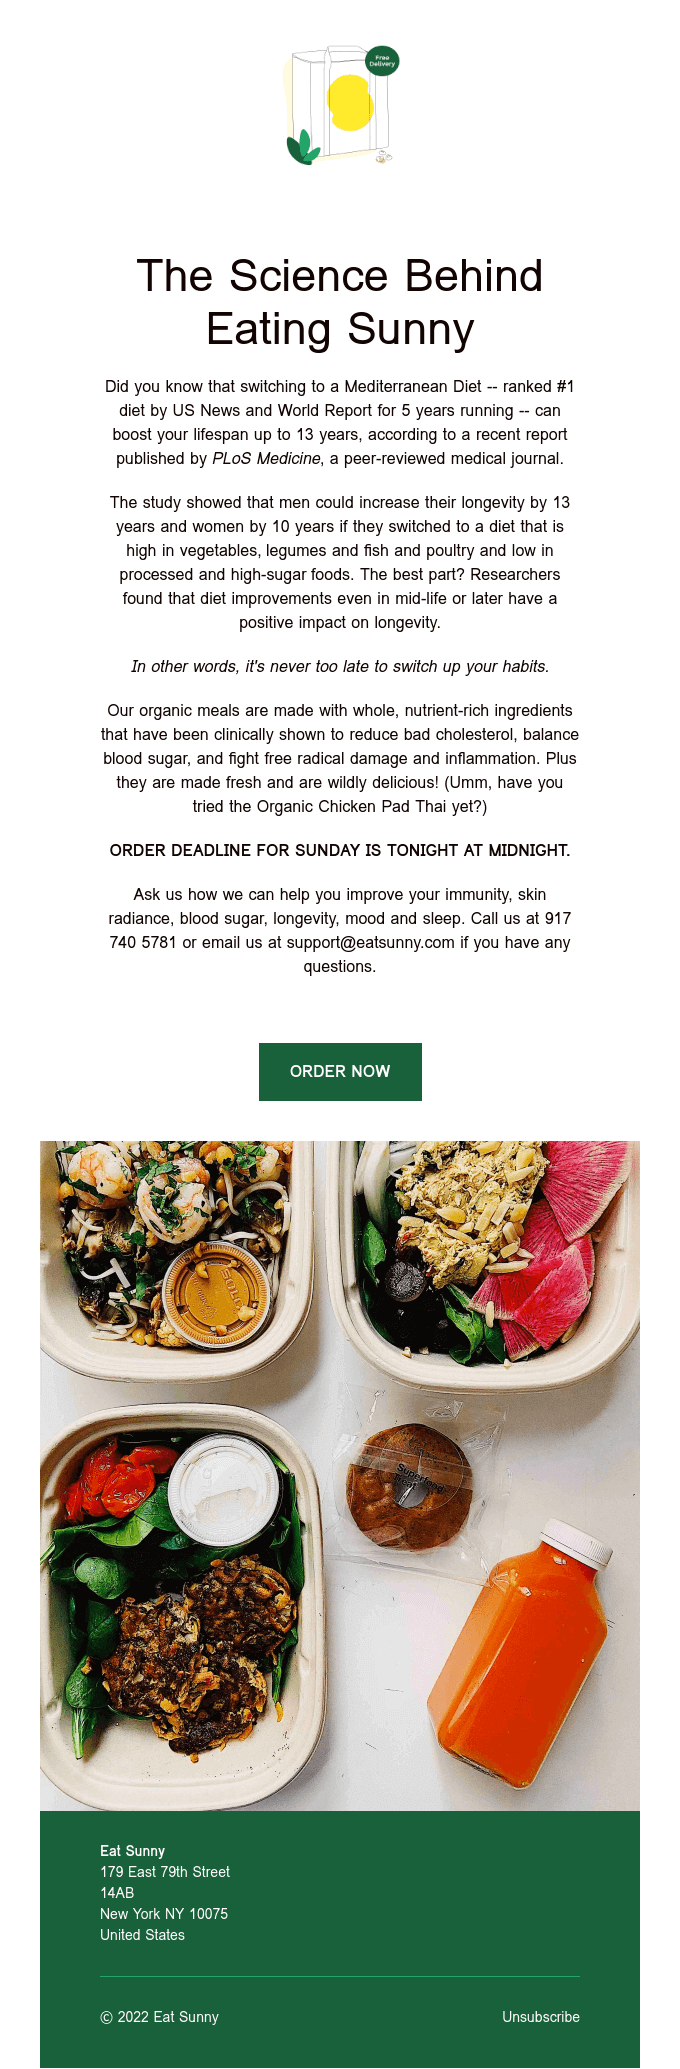 Eat Sunny newsletter email